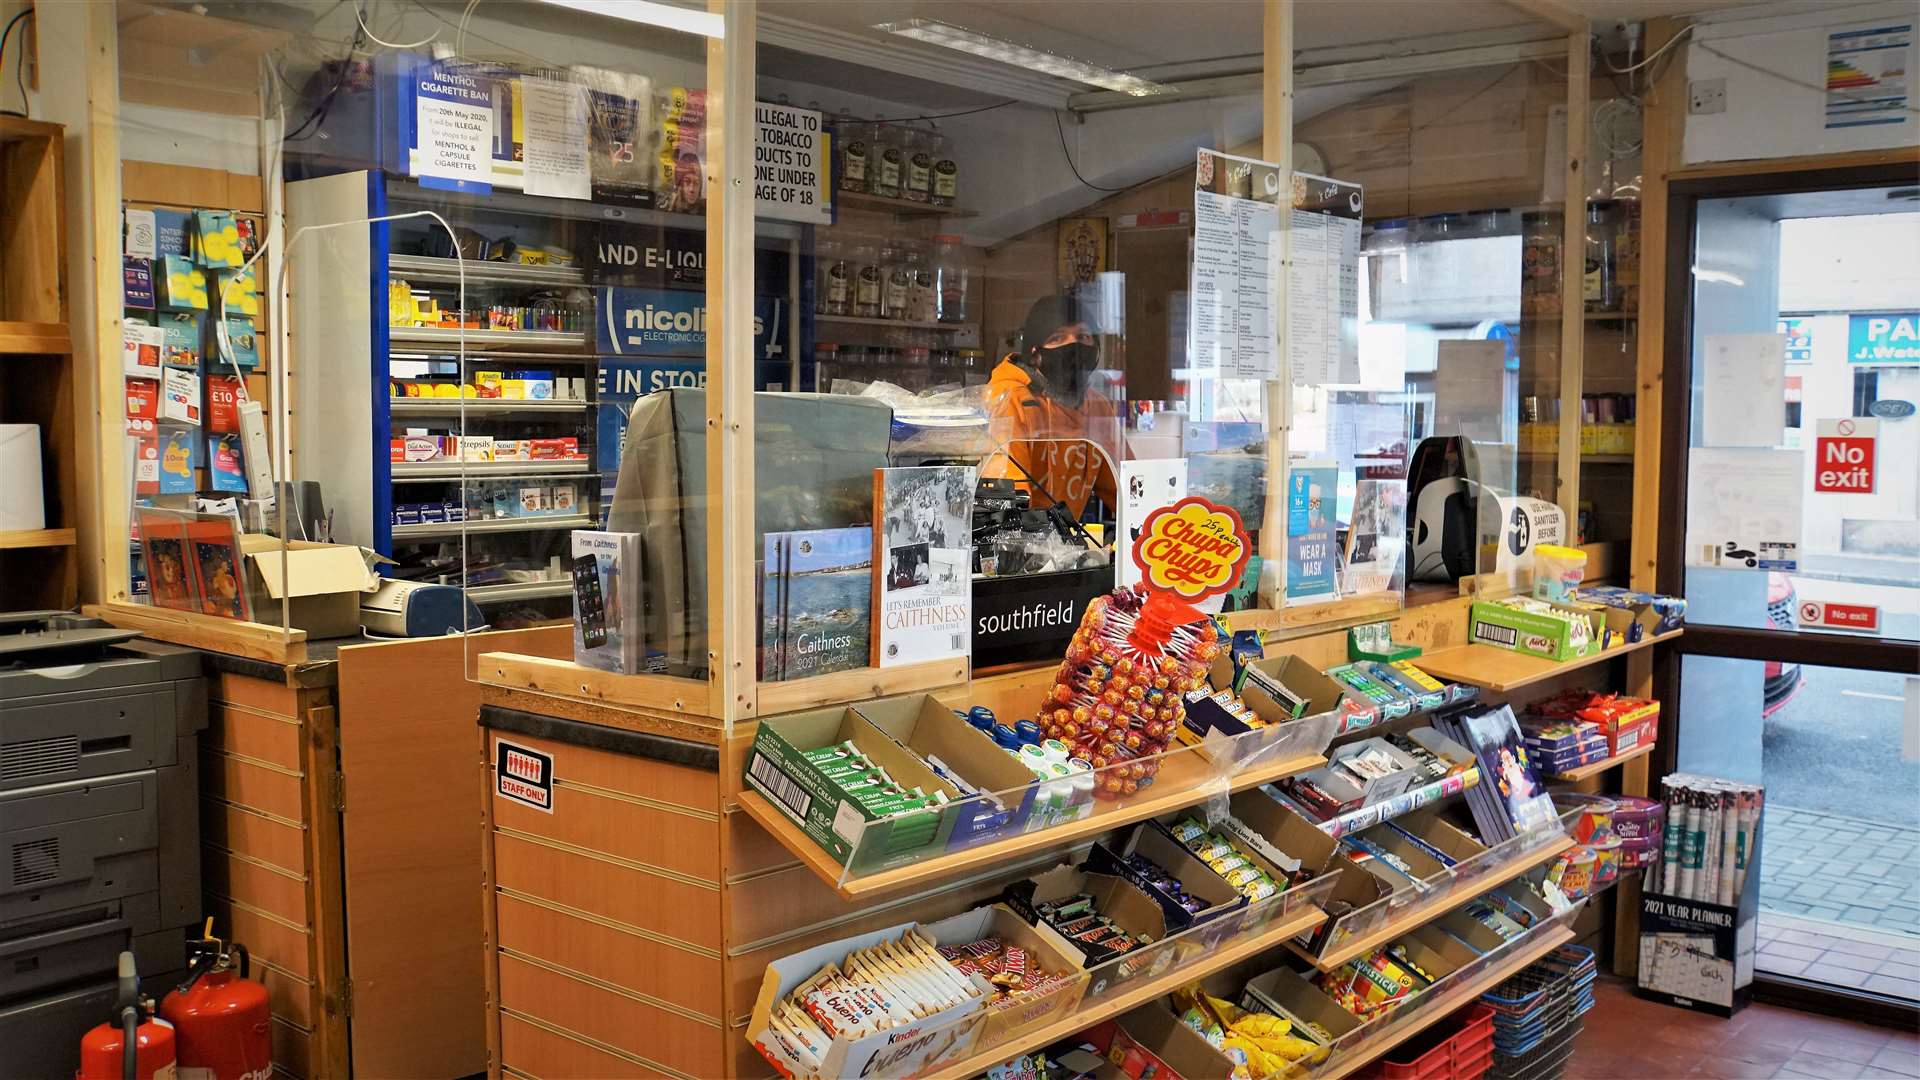 Popular staff member Jarvis manning the counter of the Jim Bews newsagent shop below T's café.